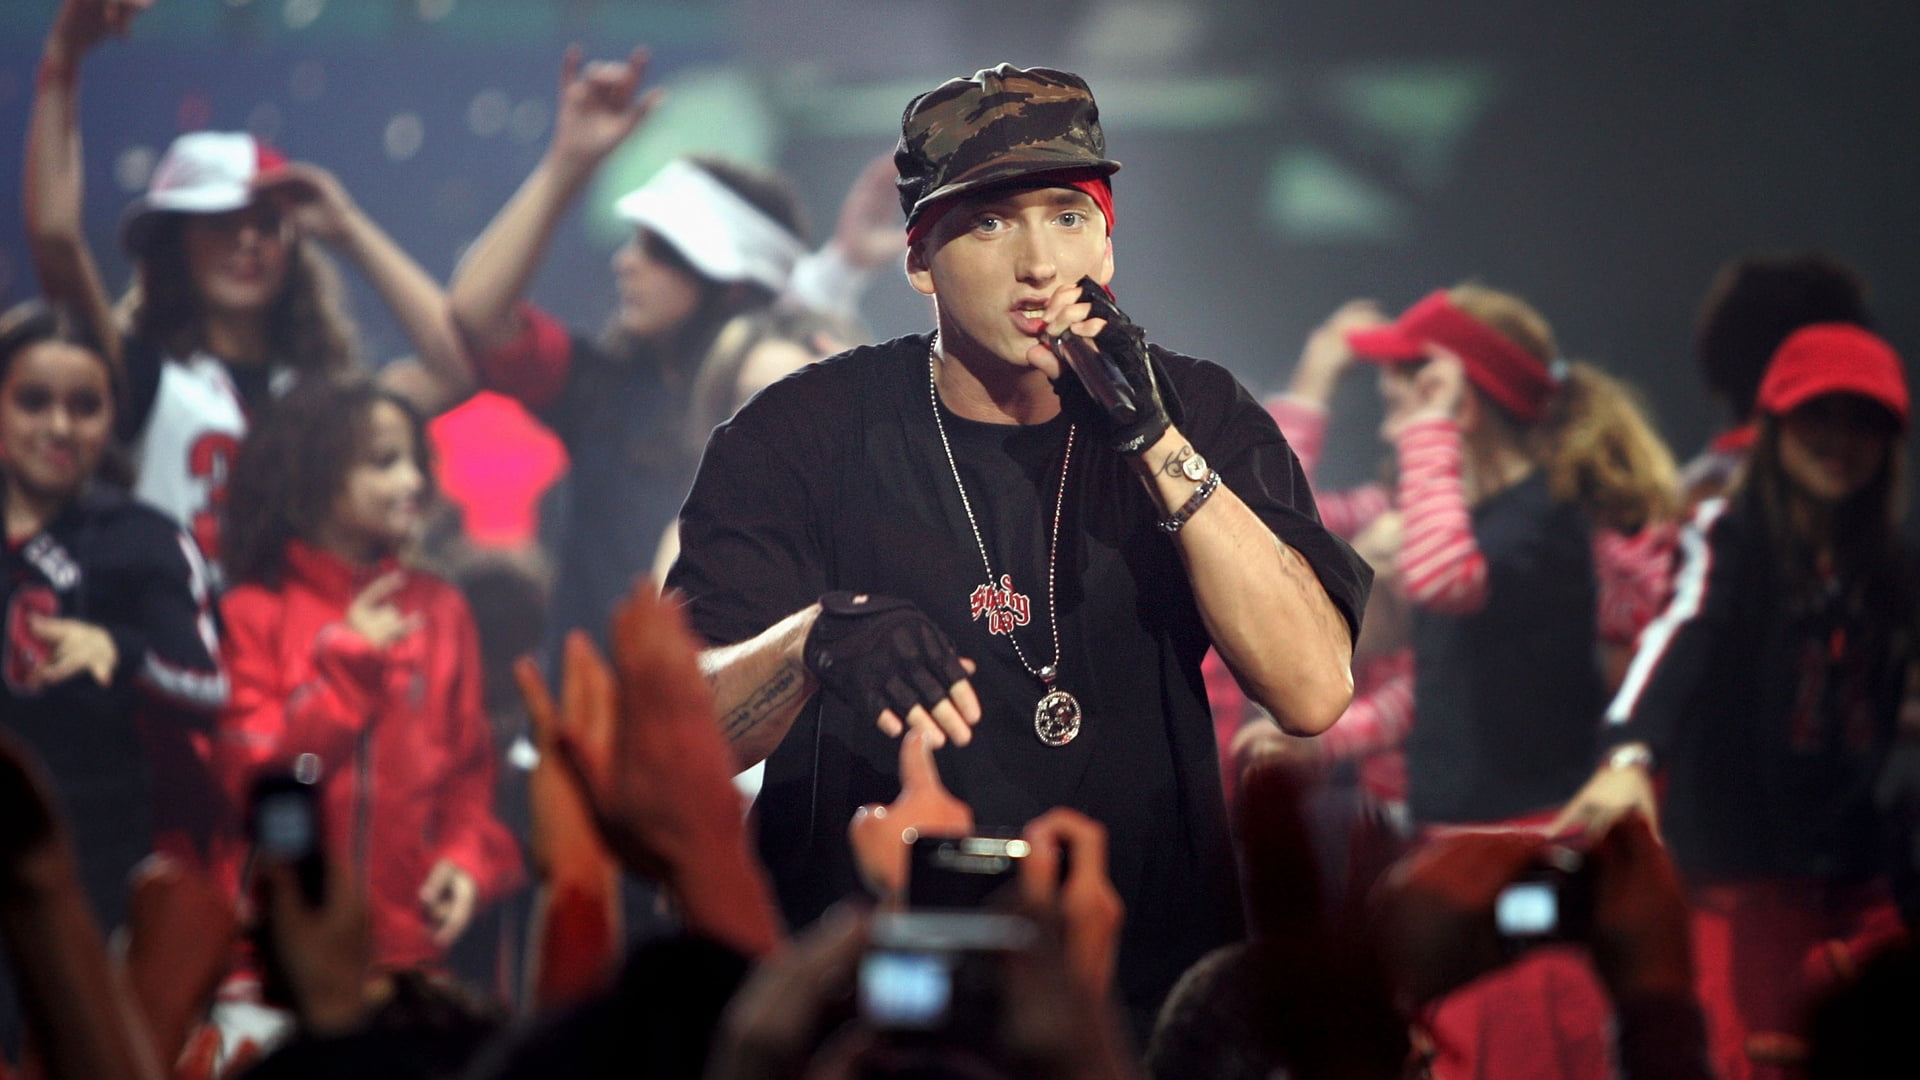 Eminem, microphone, gloves, club, cap, music, people, men, stage - Performance Space